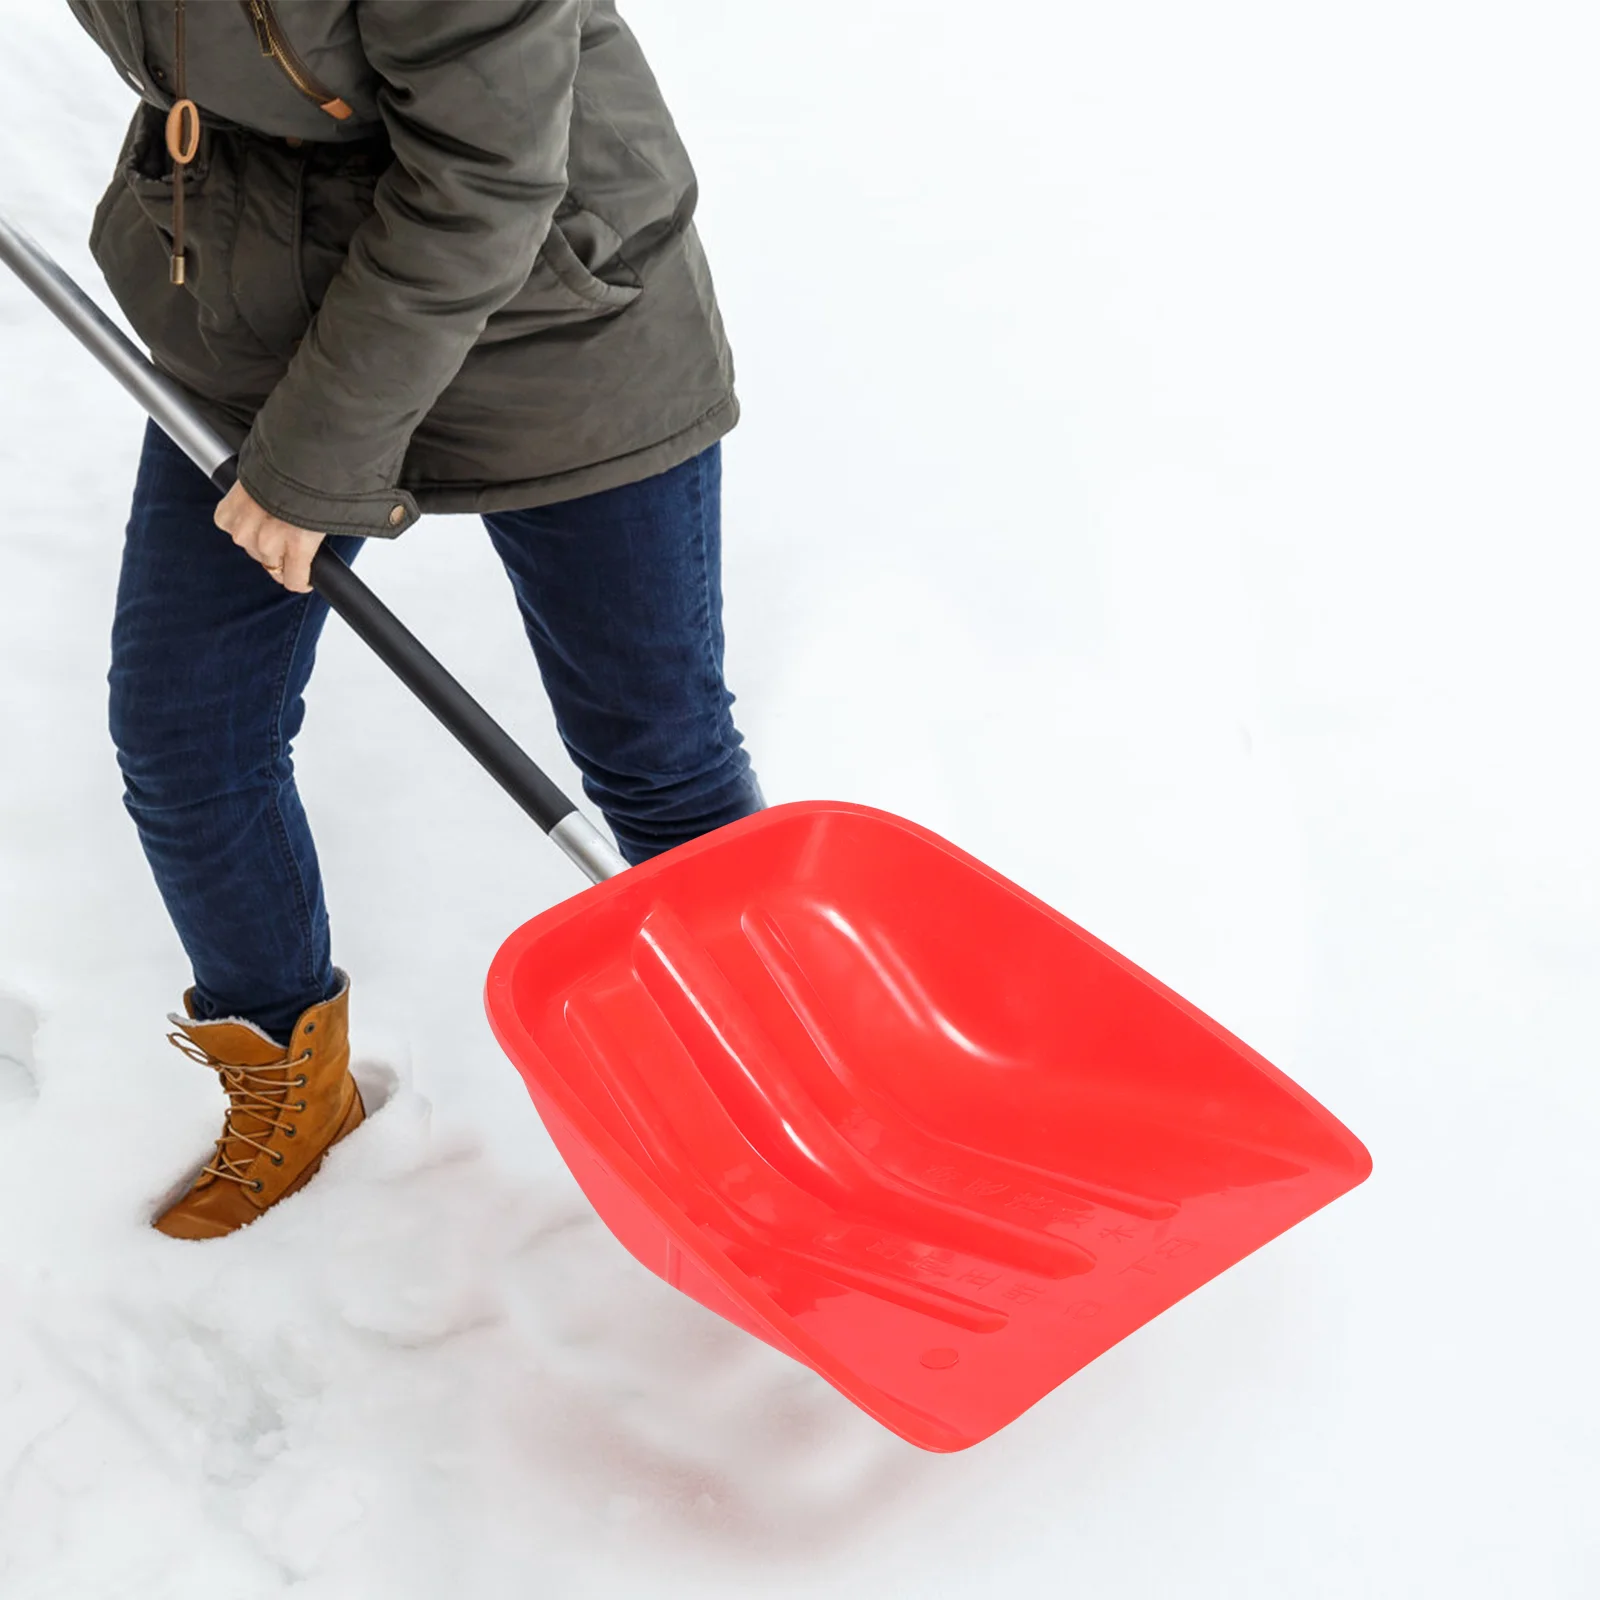 

Snow Shovel Head Replacement Snow Remover Plastic Snow Scraper Emergency Shovel Pet Pood Scoop Beach Sand Toys Snow Soil